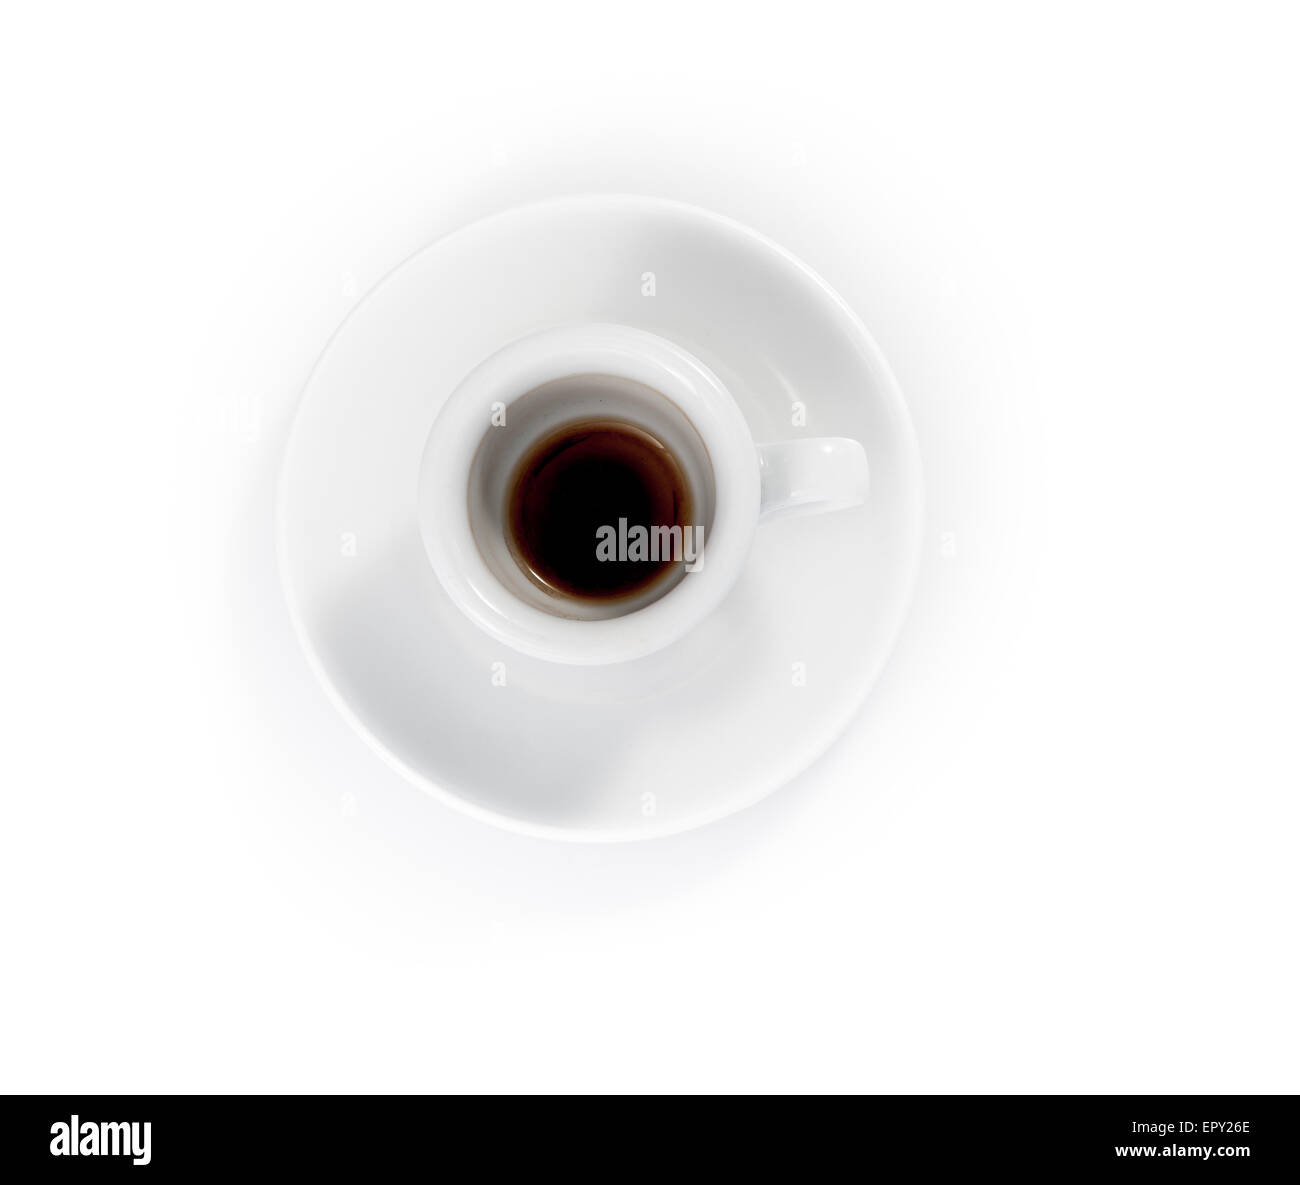 https://c8.alamy.com/comp/EPY26E/empty-espresso-cups-isolated-on-a-white-background-EPY26E.jpg